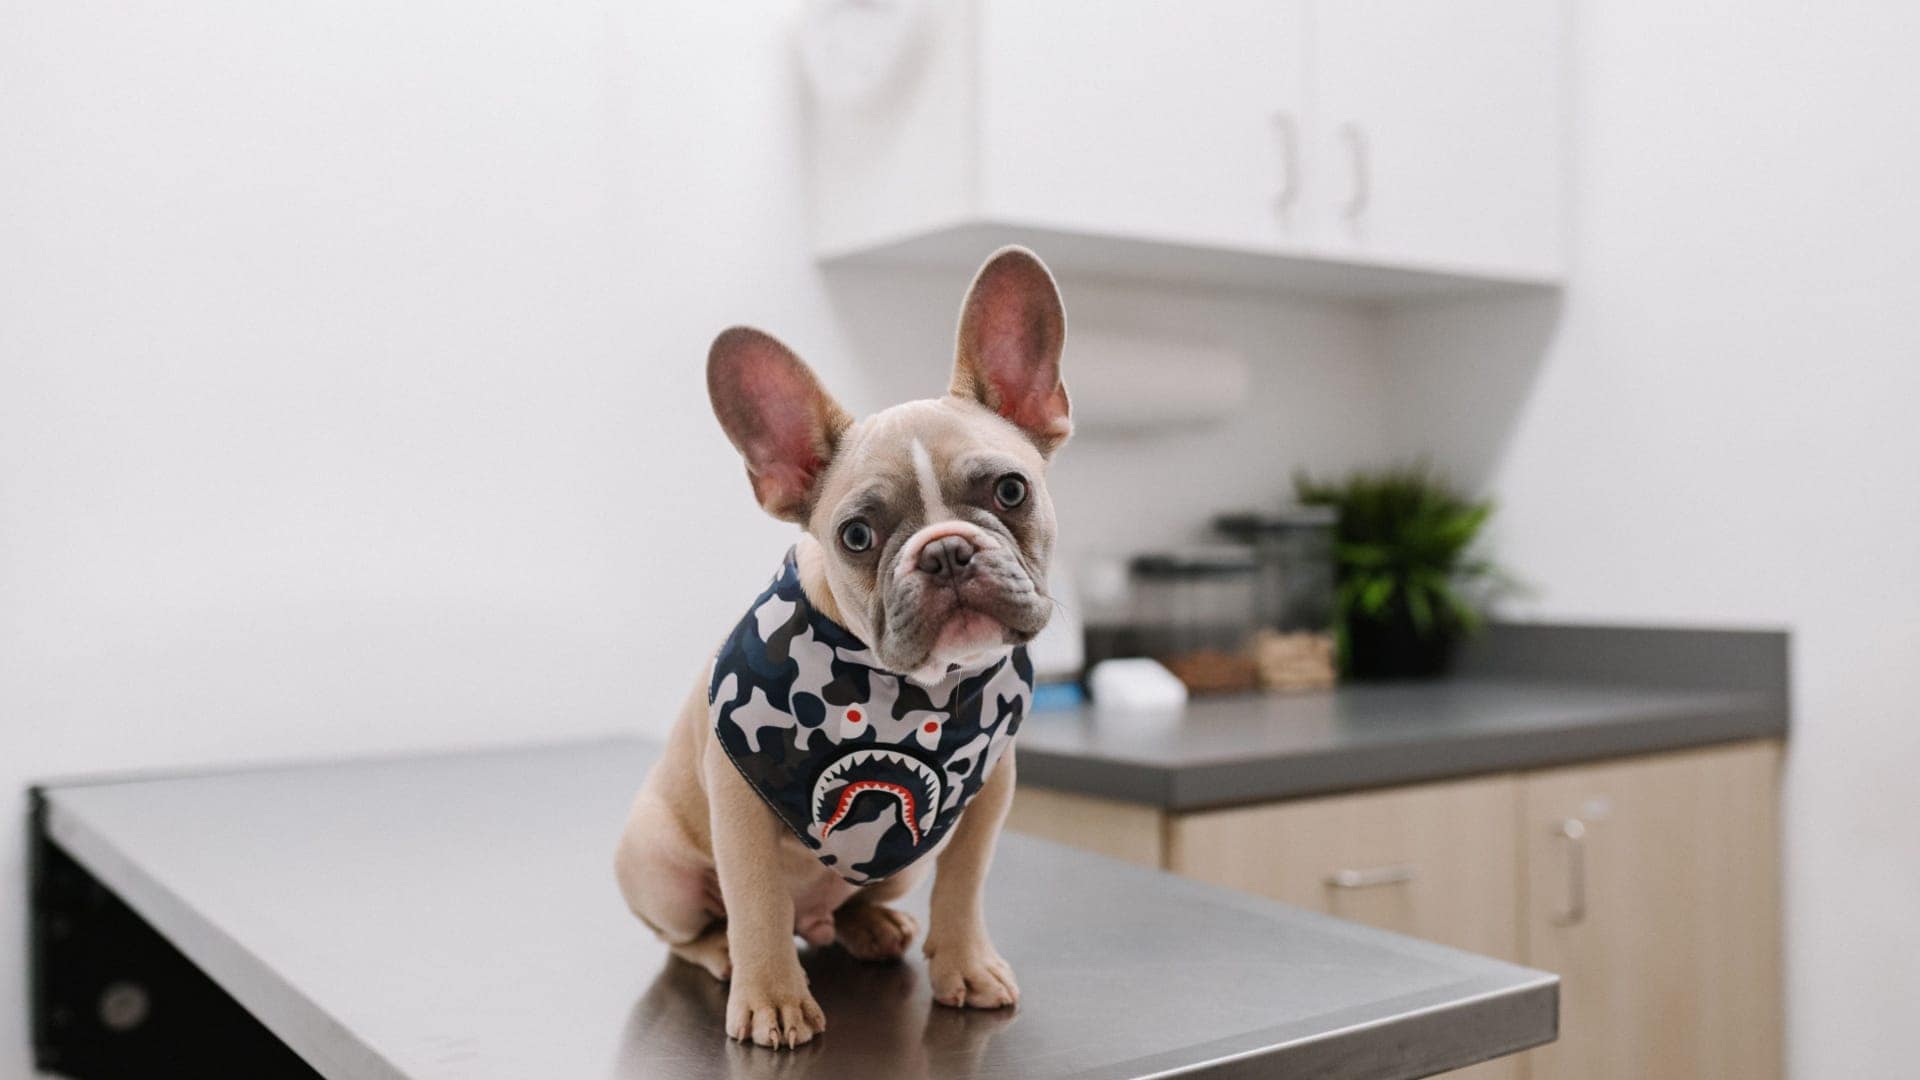 French Bulldog in stylish bandana inside kitchen